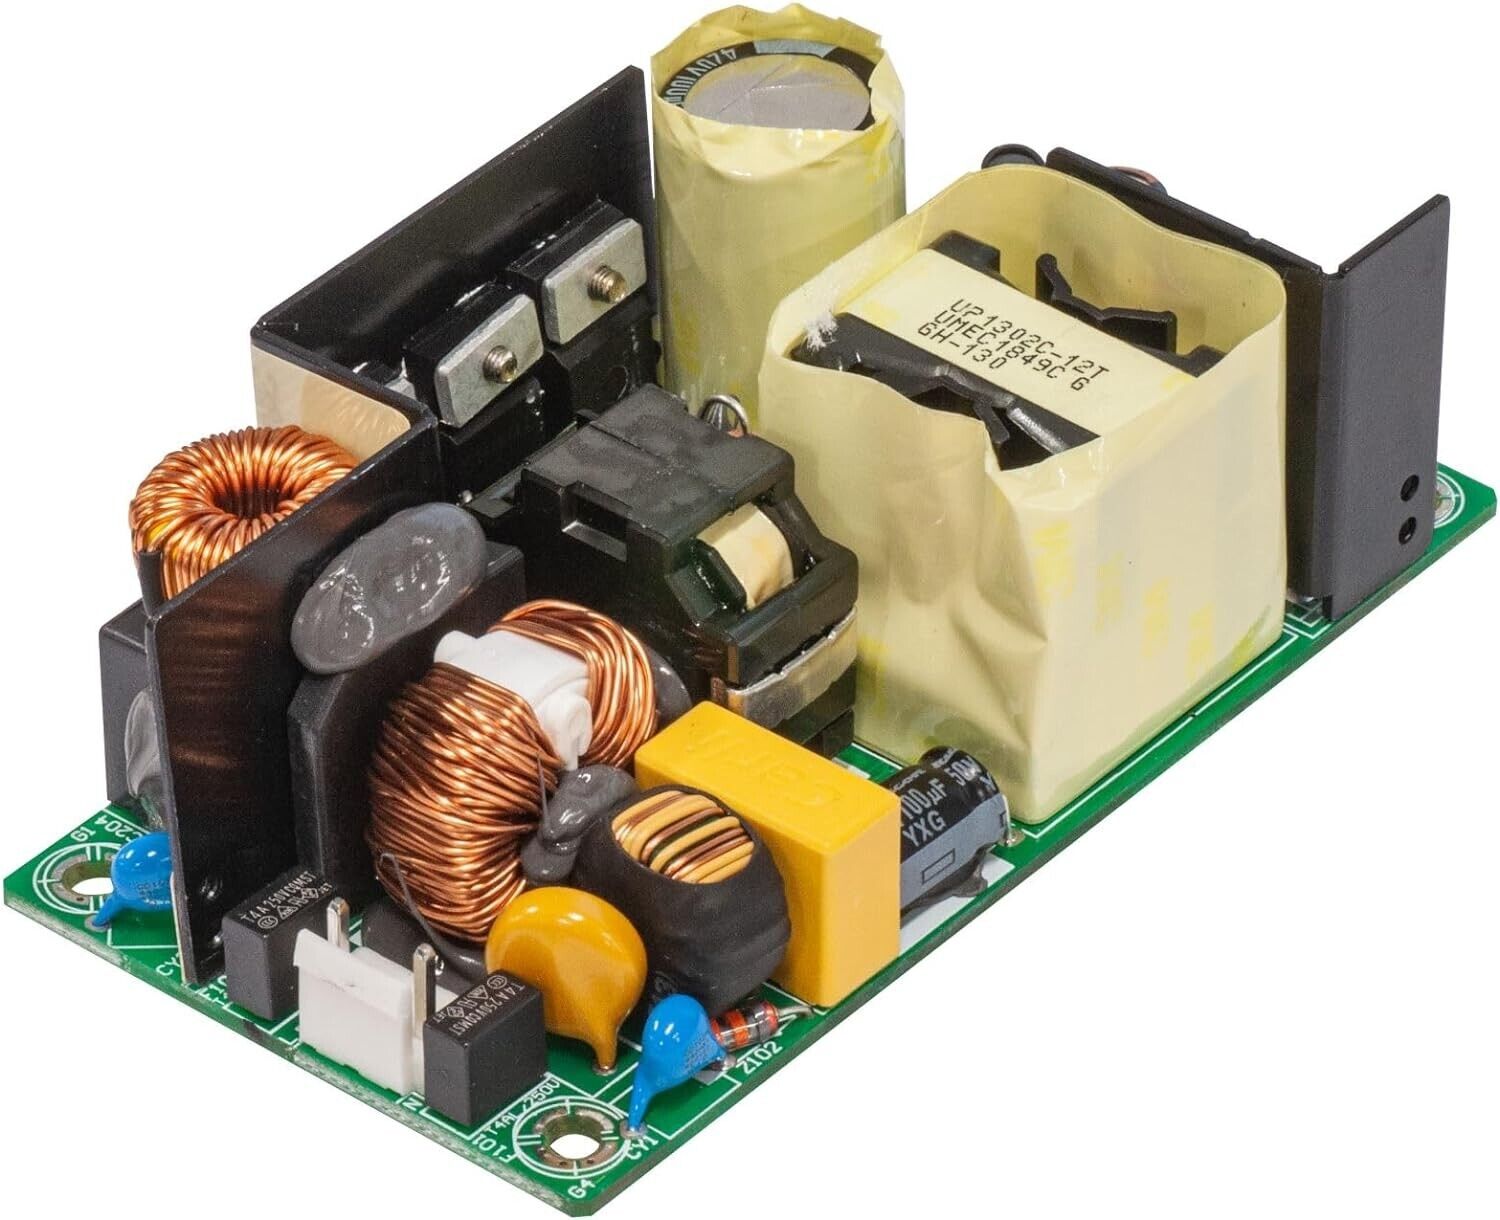 MIKROTIK 12V 10.8A Internal Power Supply UP1302C-12 12V 10.8A CCR1036 Series mikrotik UP1302C-12